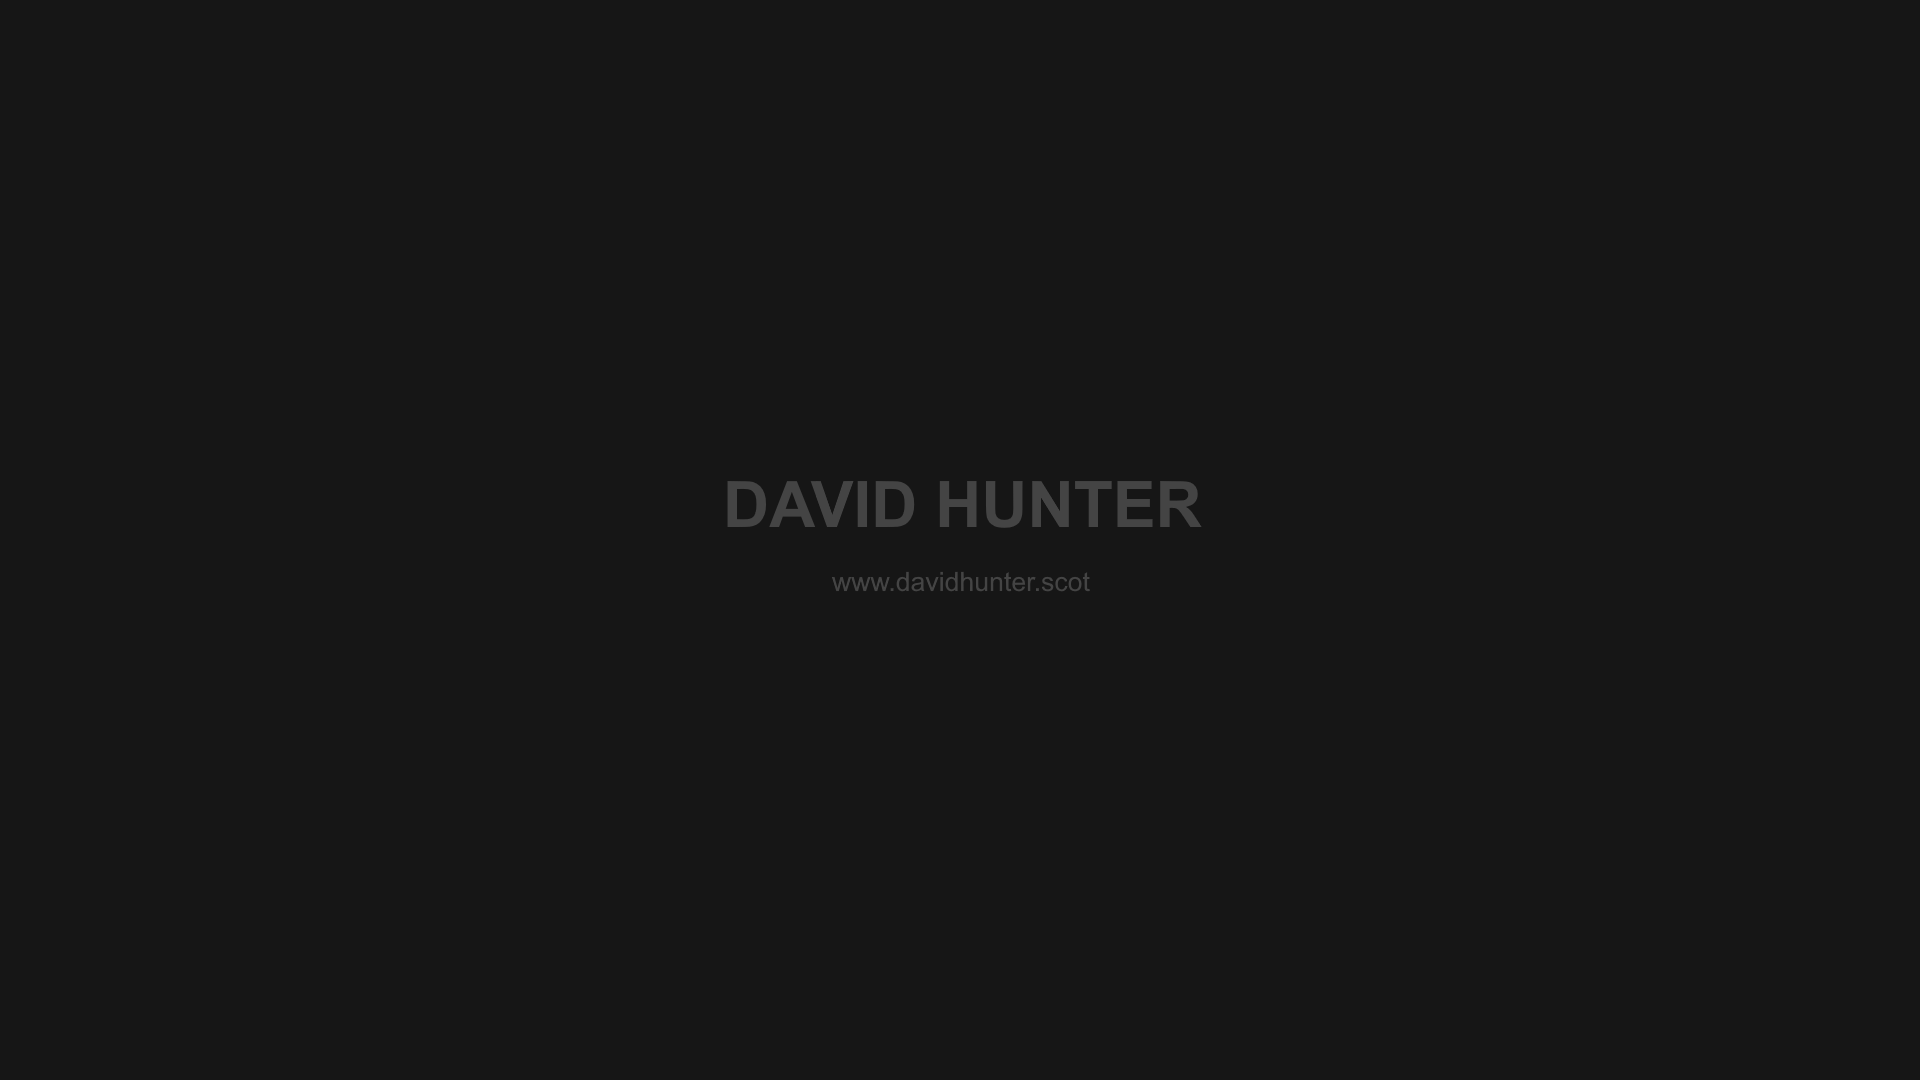 David Hunter Website URL Dark Desktop Wallpaper Image